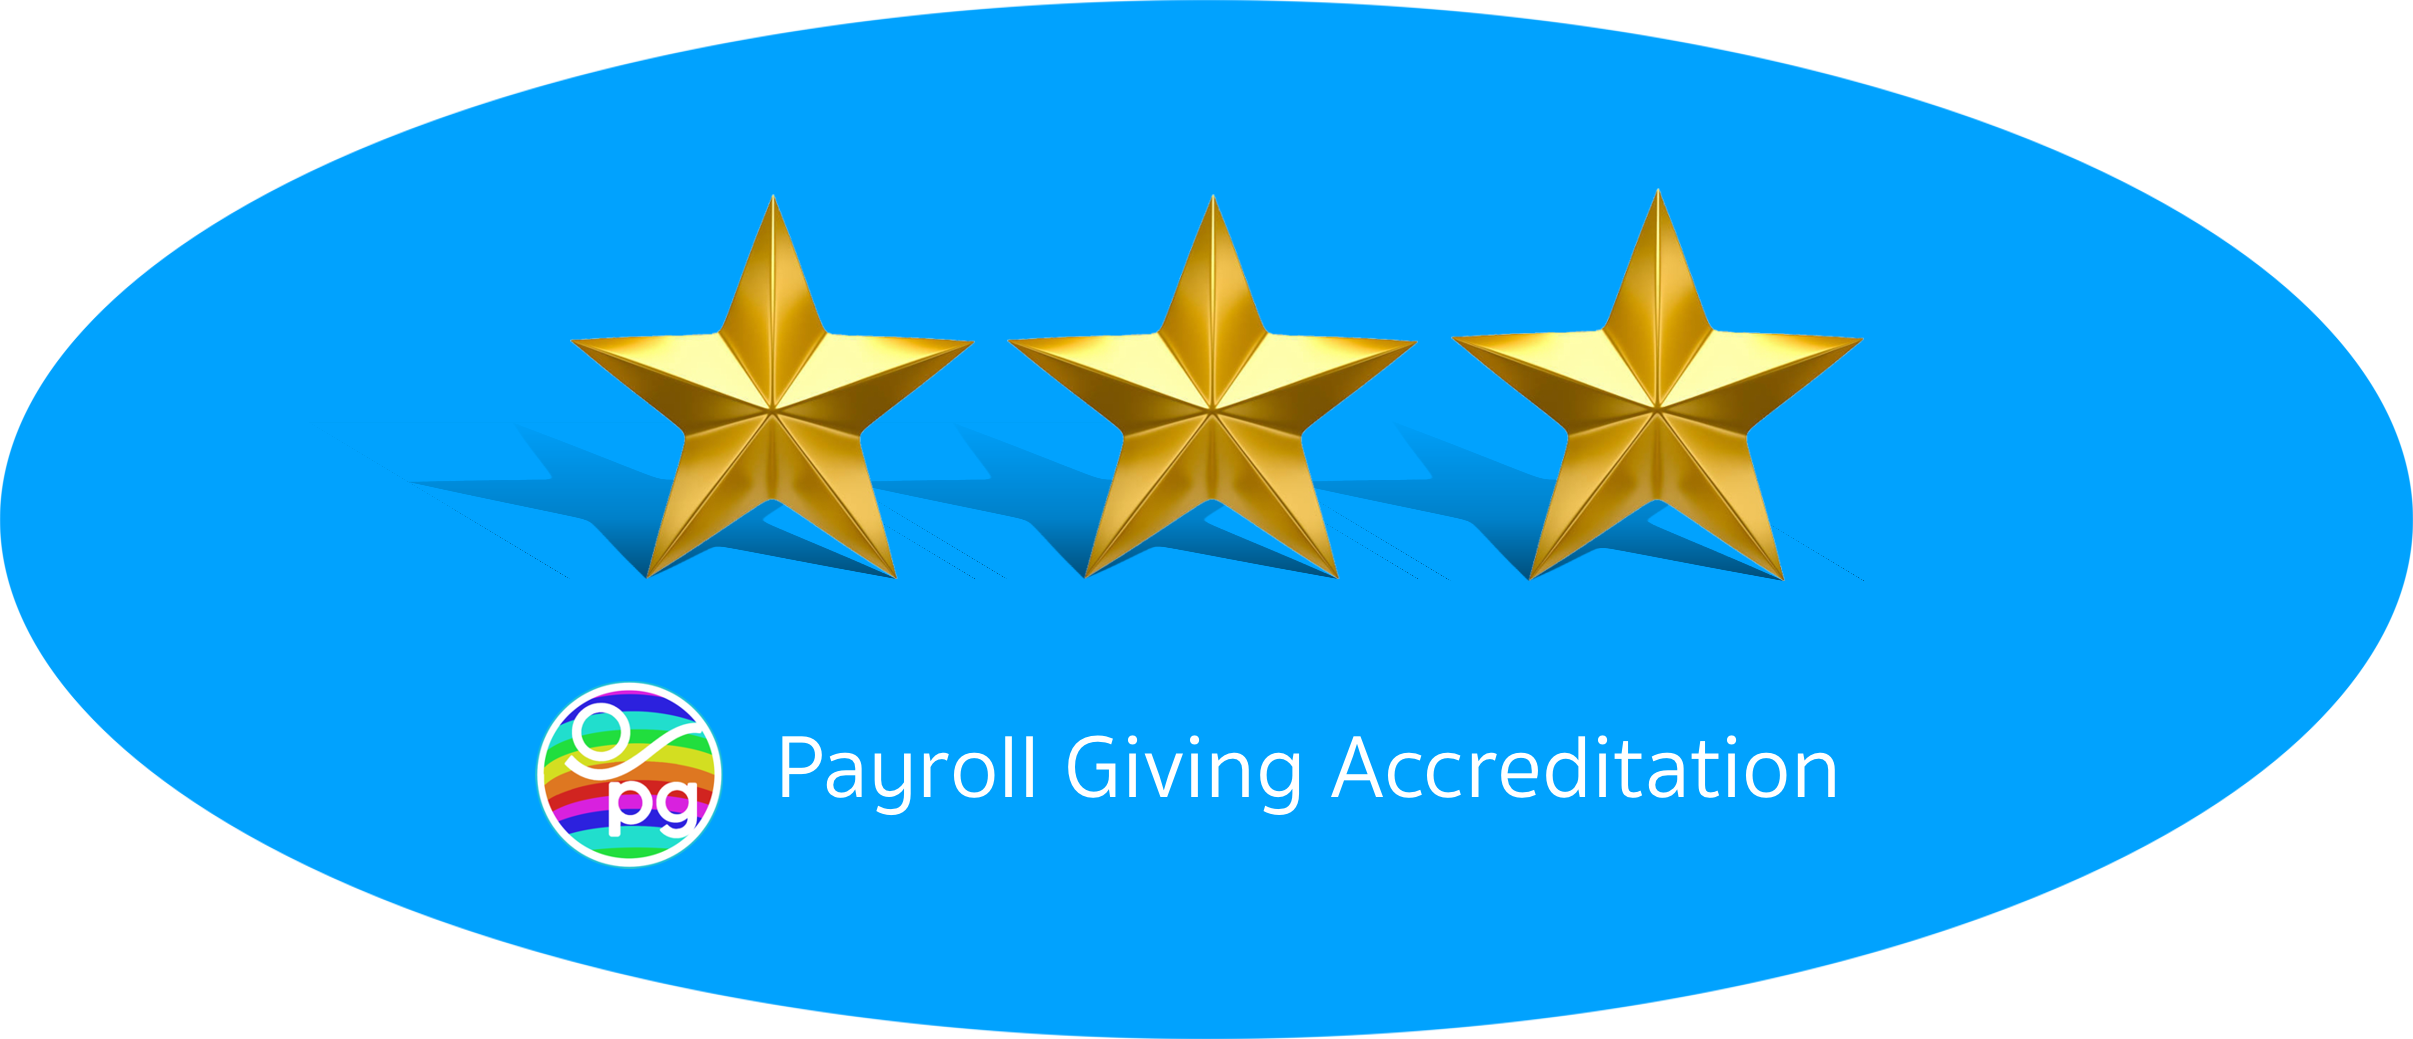 Payroll Giving Accreditation - 3 stars